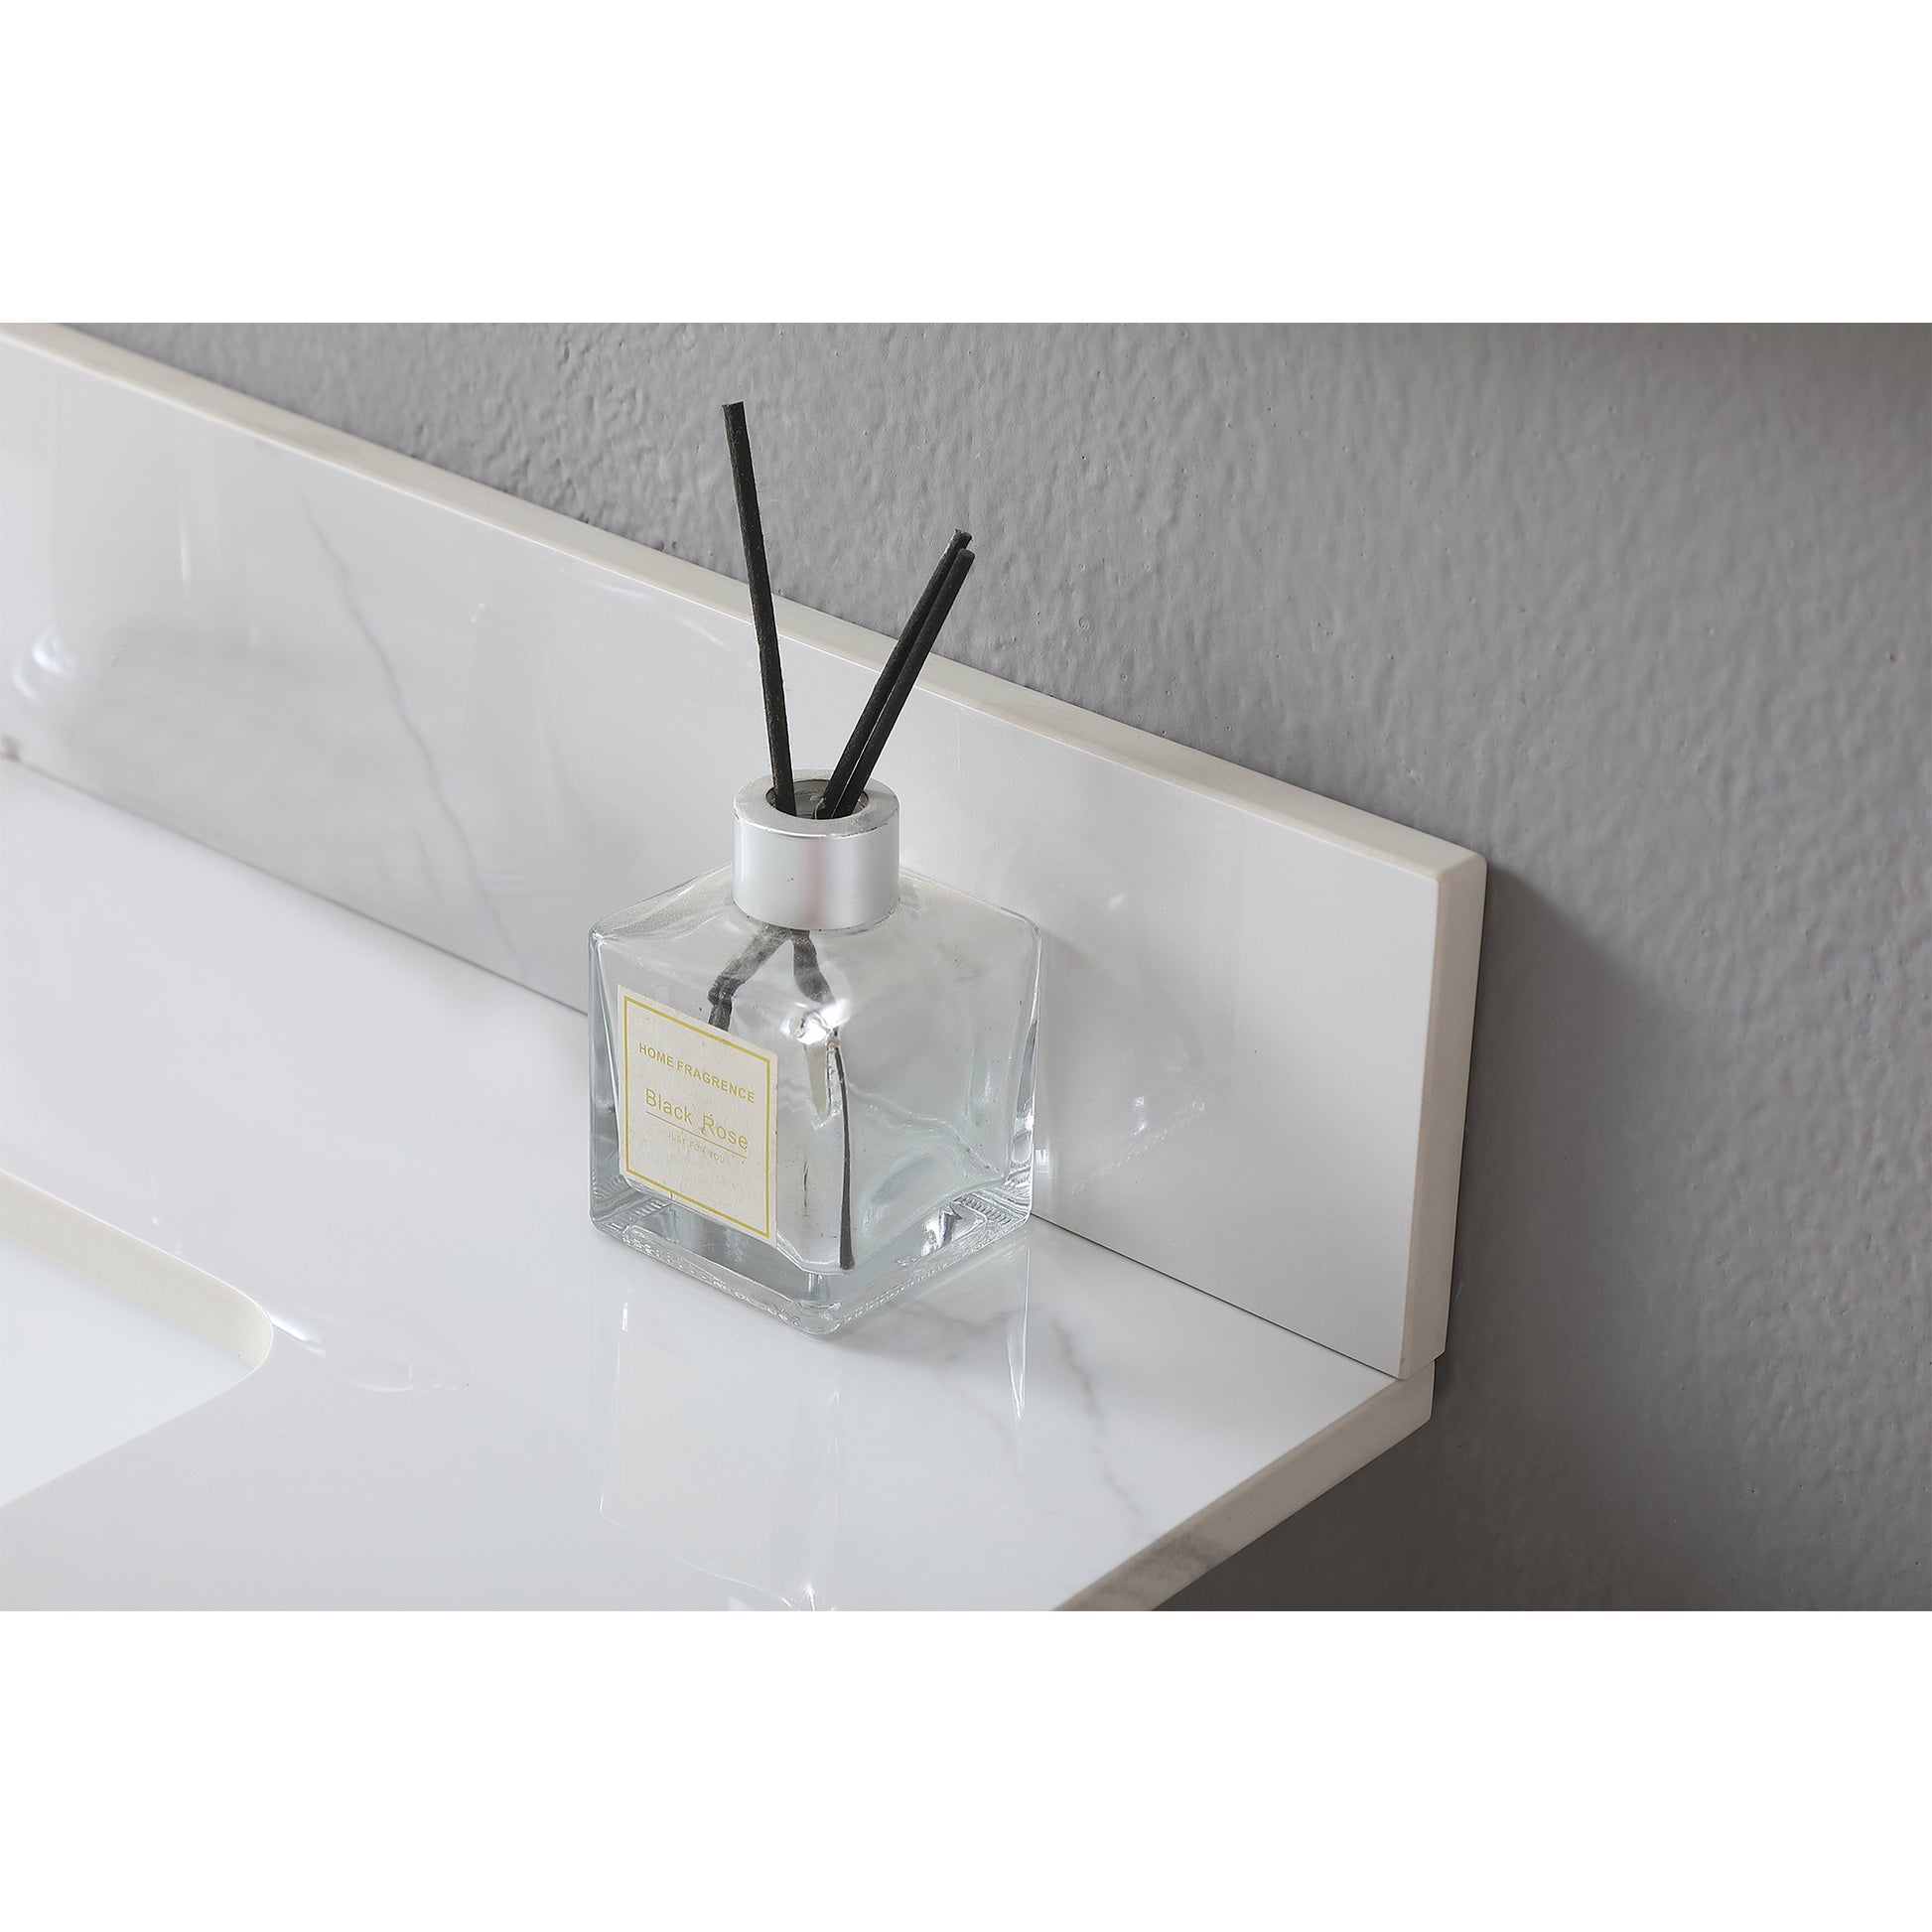 Montary 31inch bathroom stone vanity top carrara gold white-sintered stone